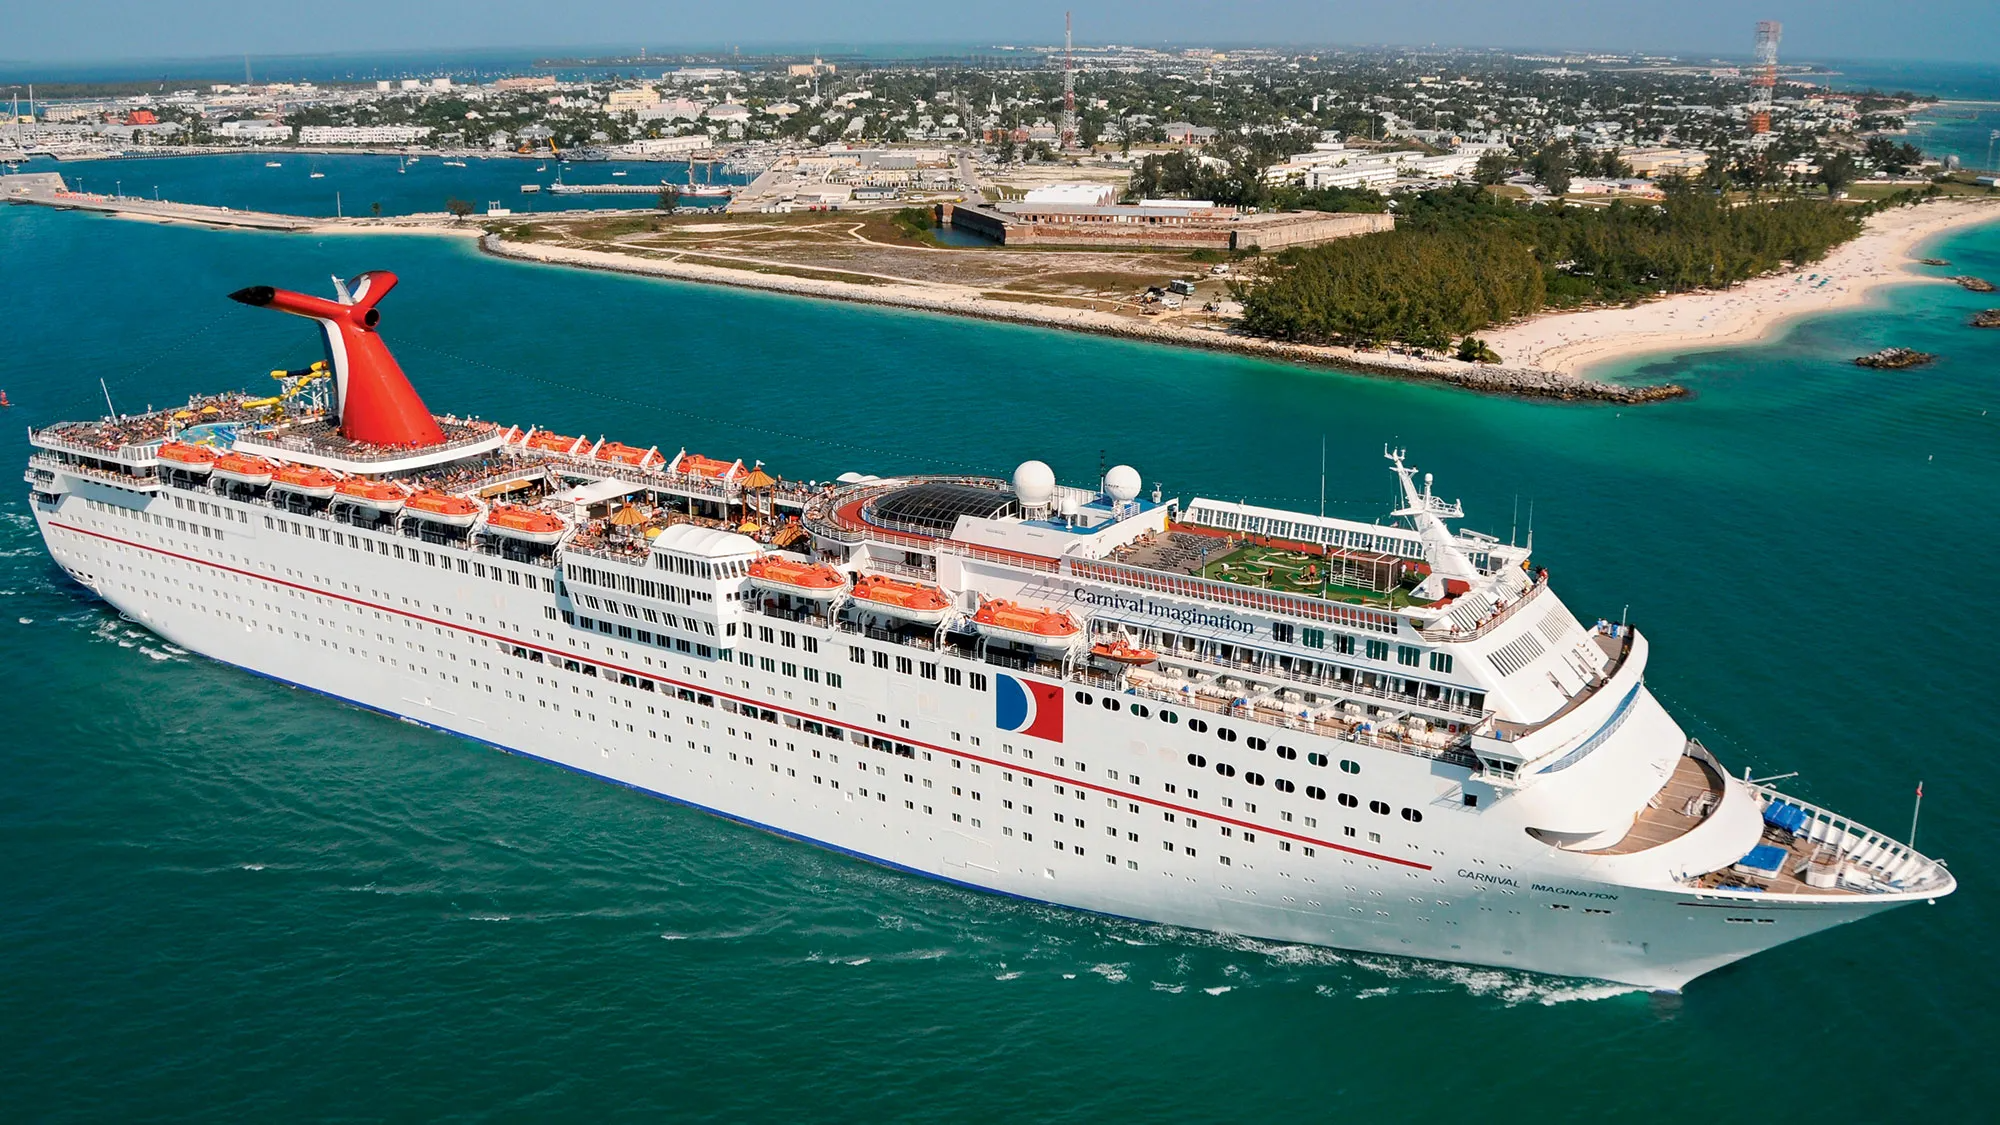 image of a cruise ship